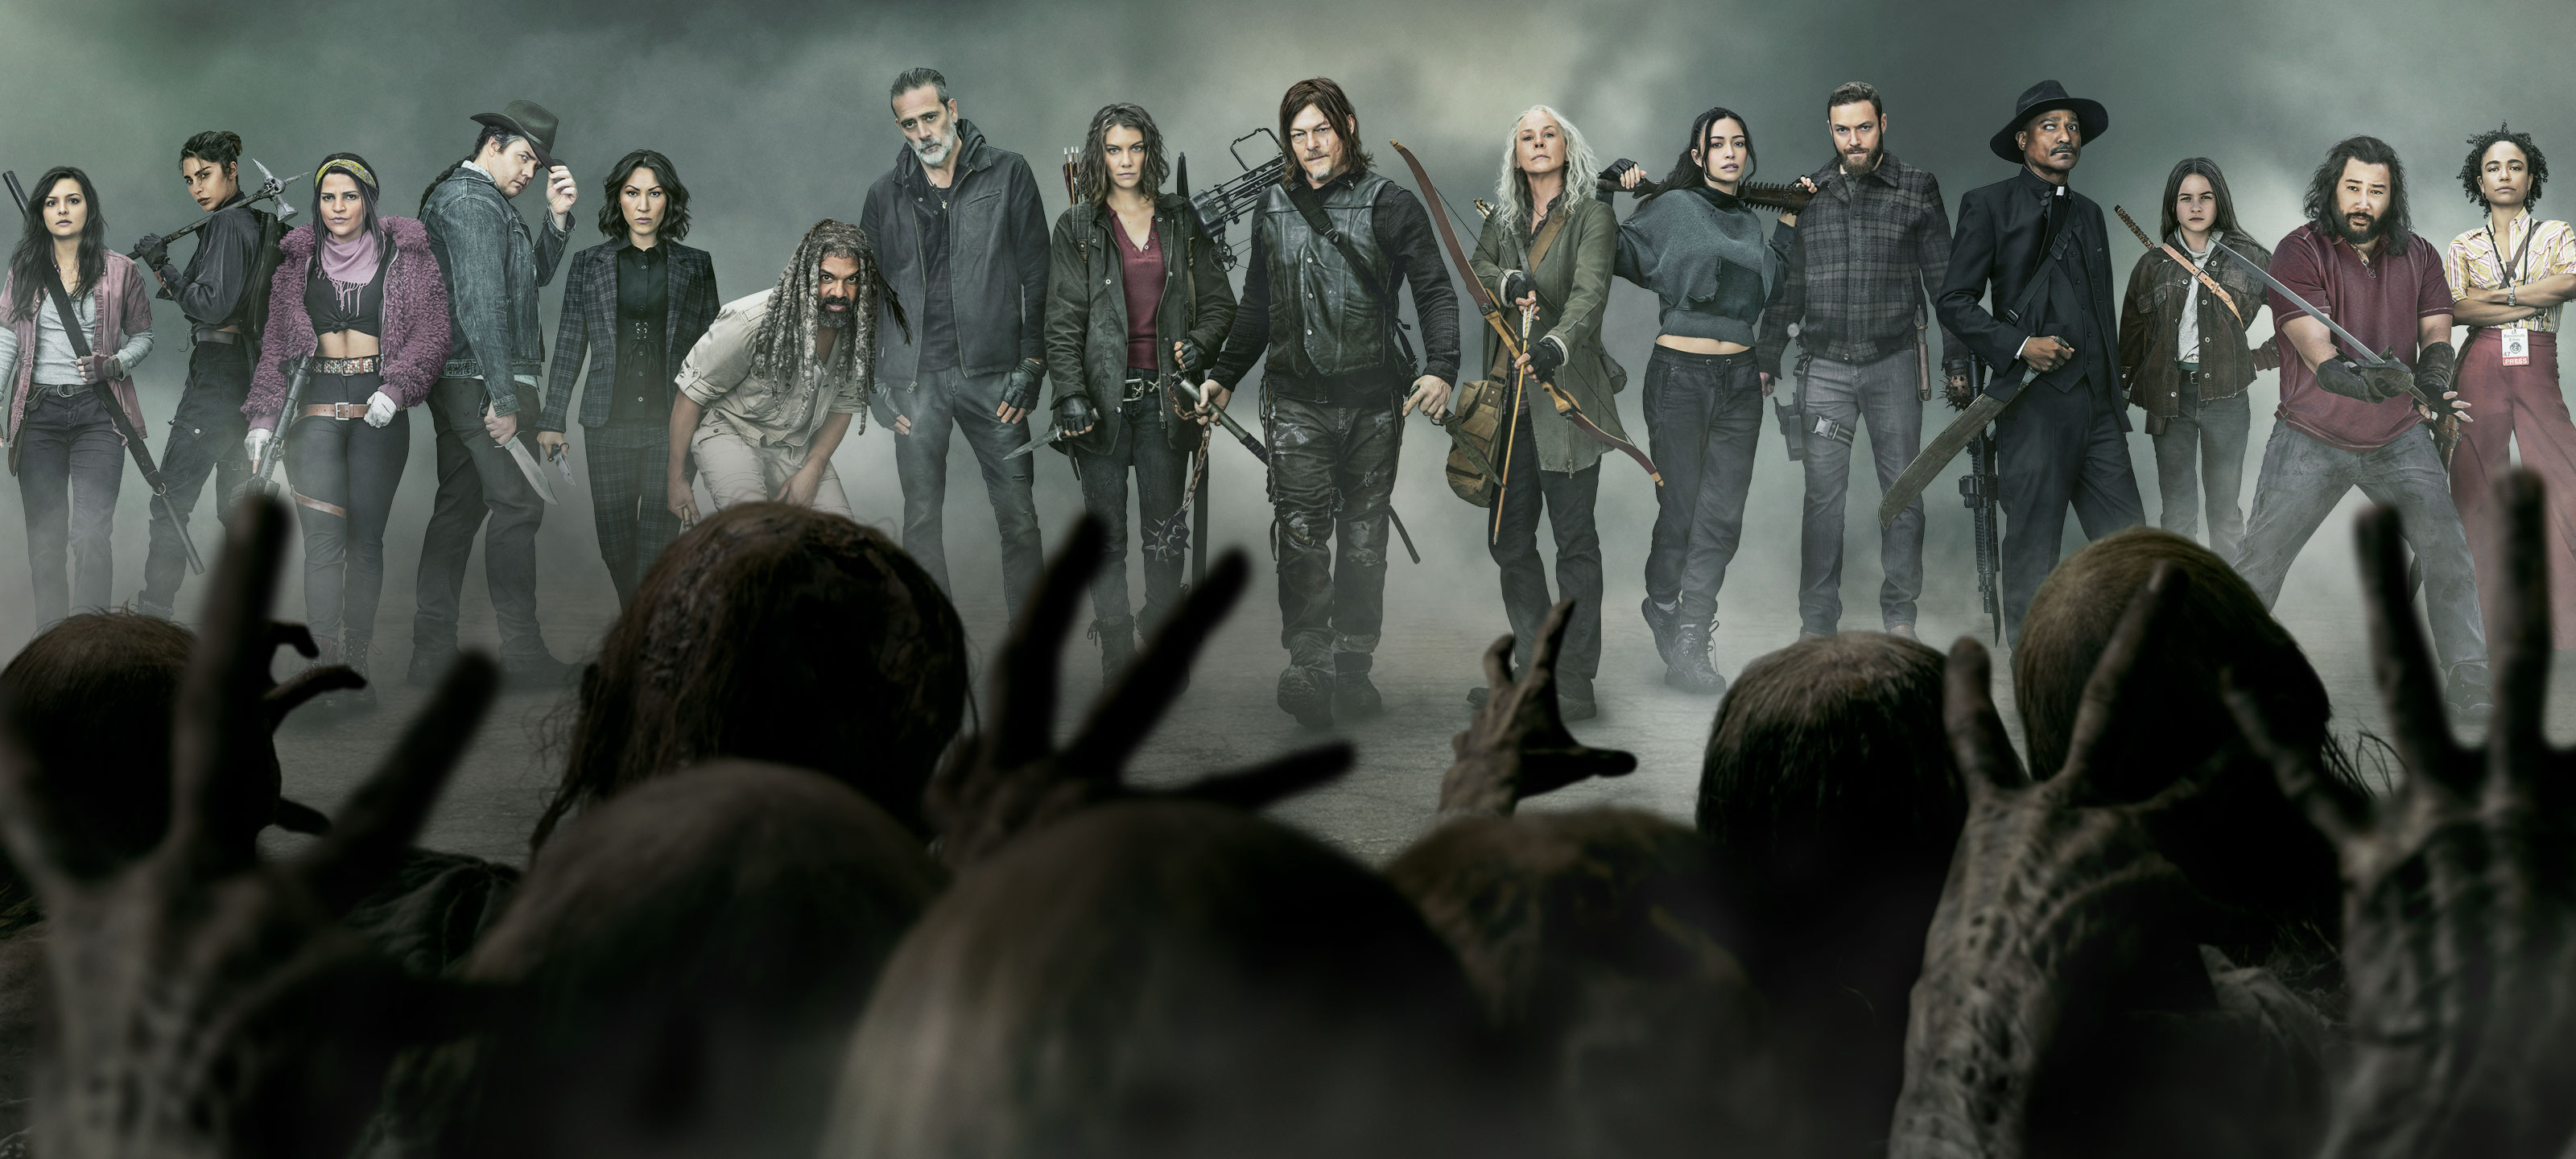 douche Diverse Beangstigend Watch The Walking Dead Season Online | AMC